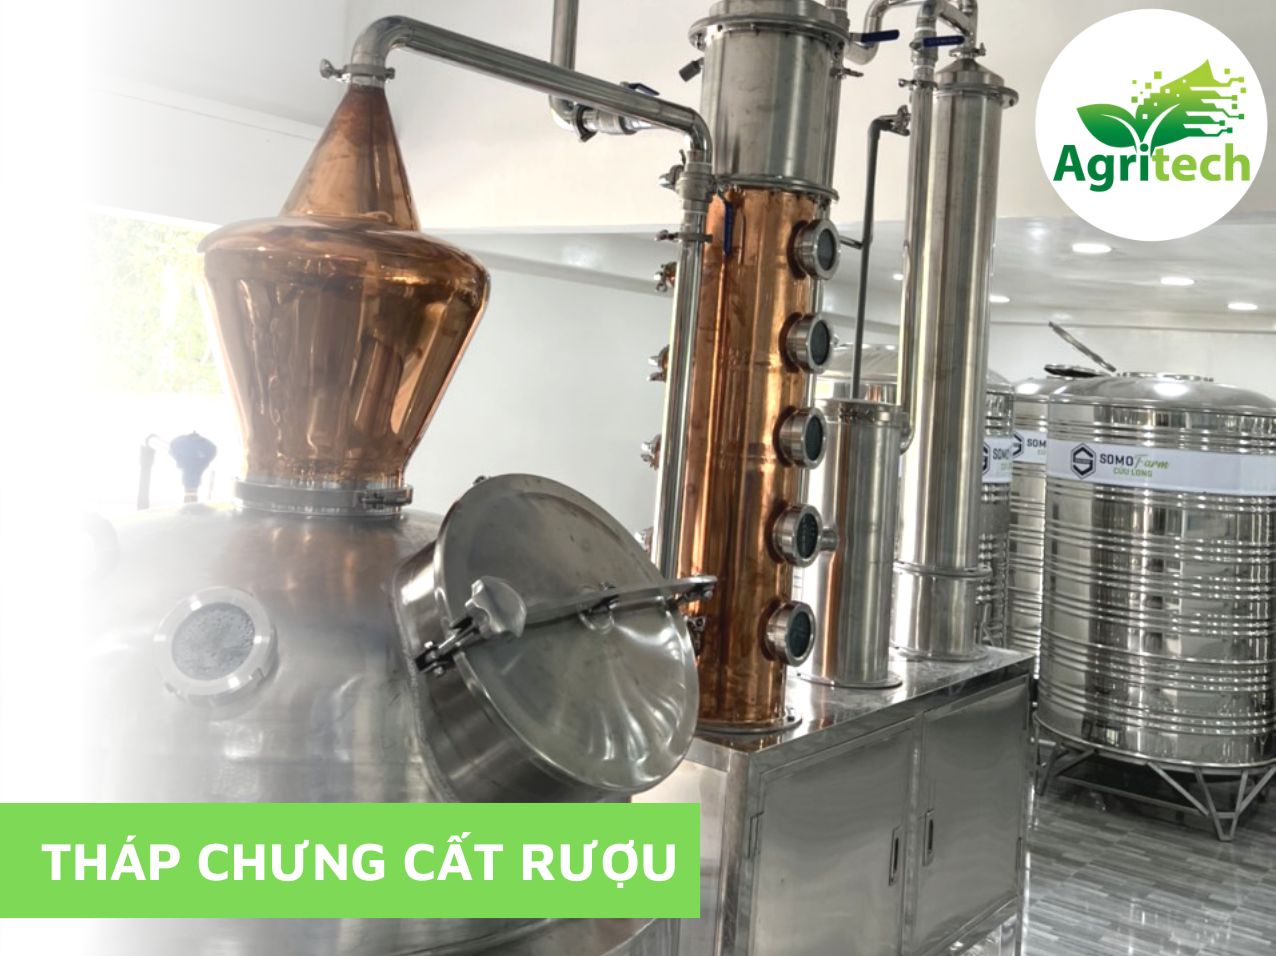 thap chung cat ruou 500 lit agritech